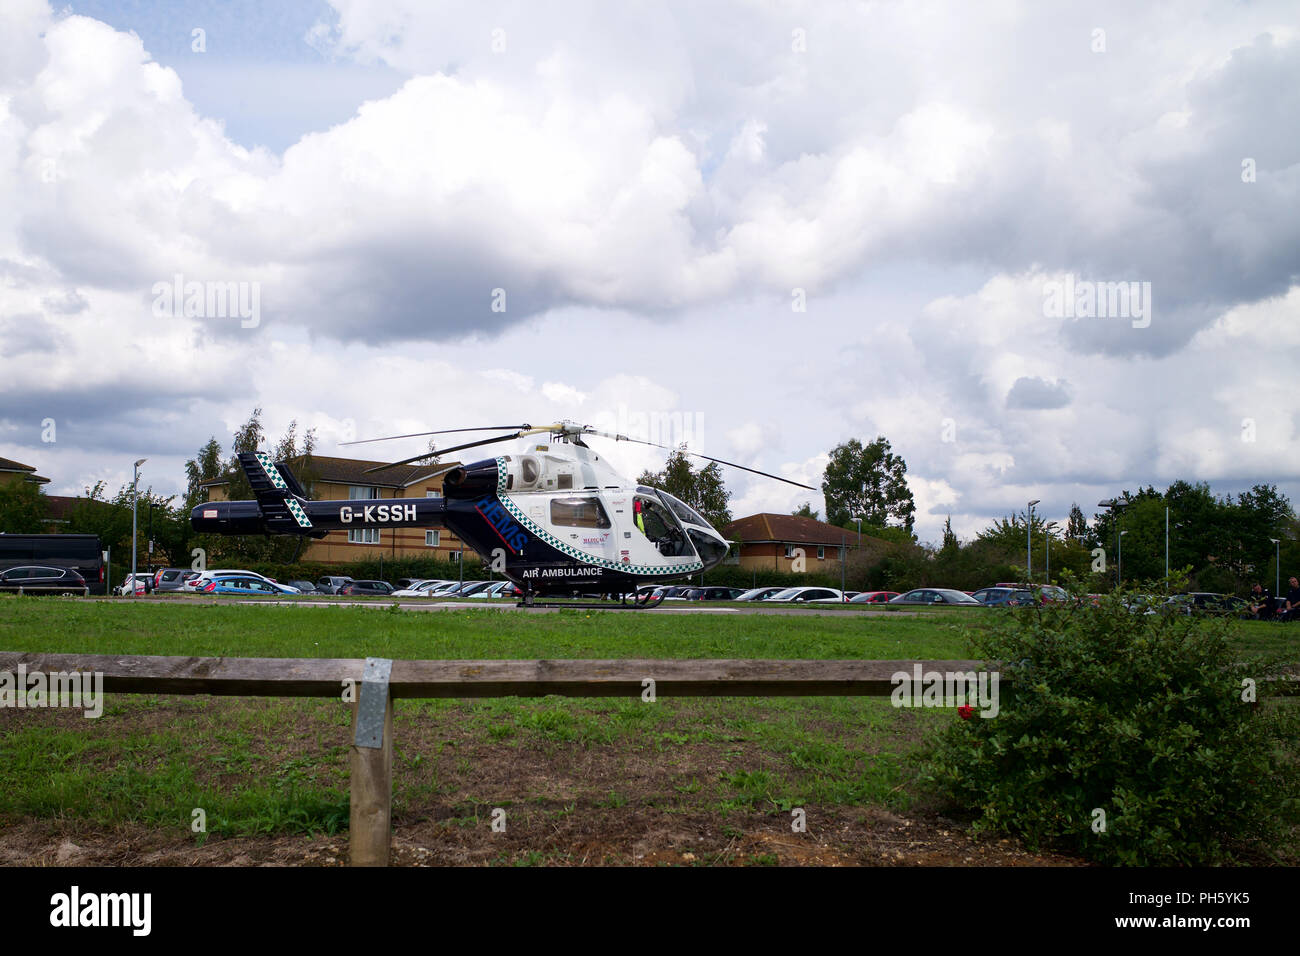 Medical Aviation Services Air Ambulance. Stock Photo